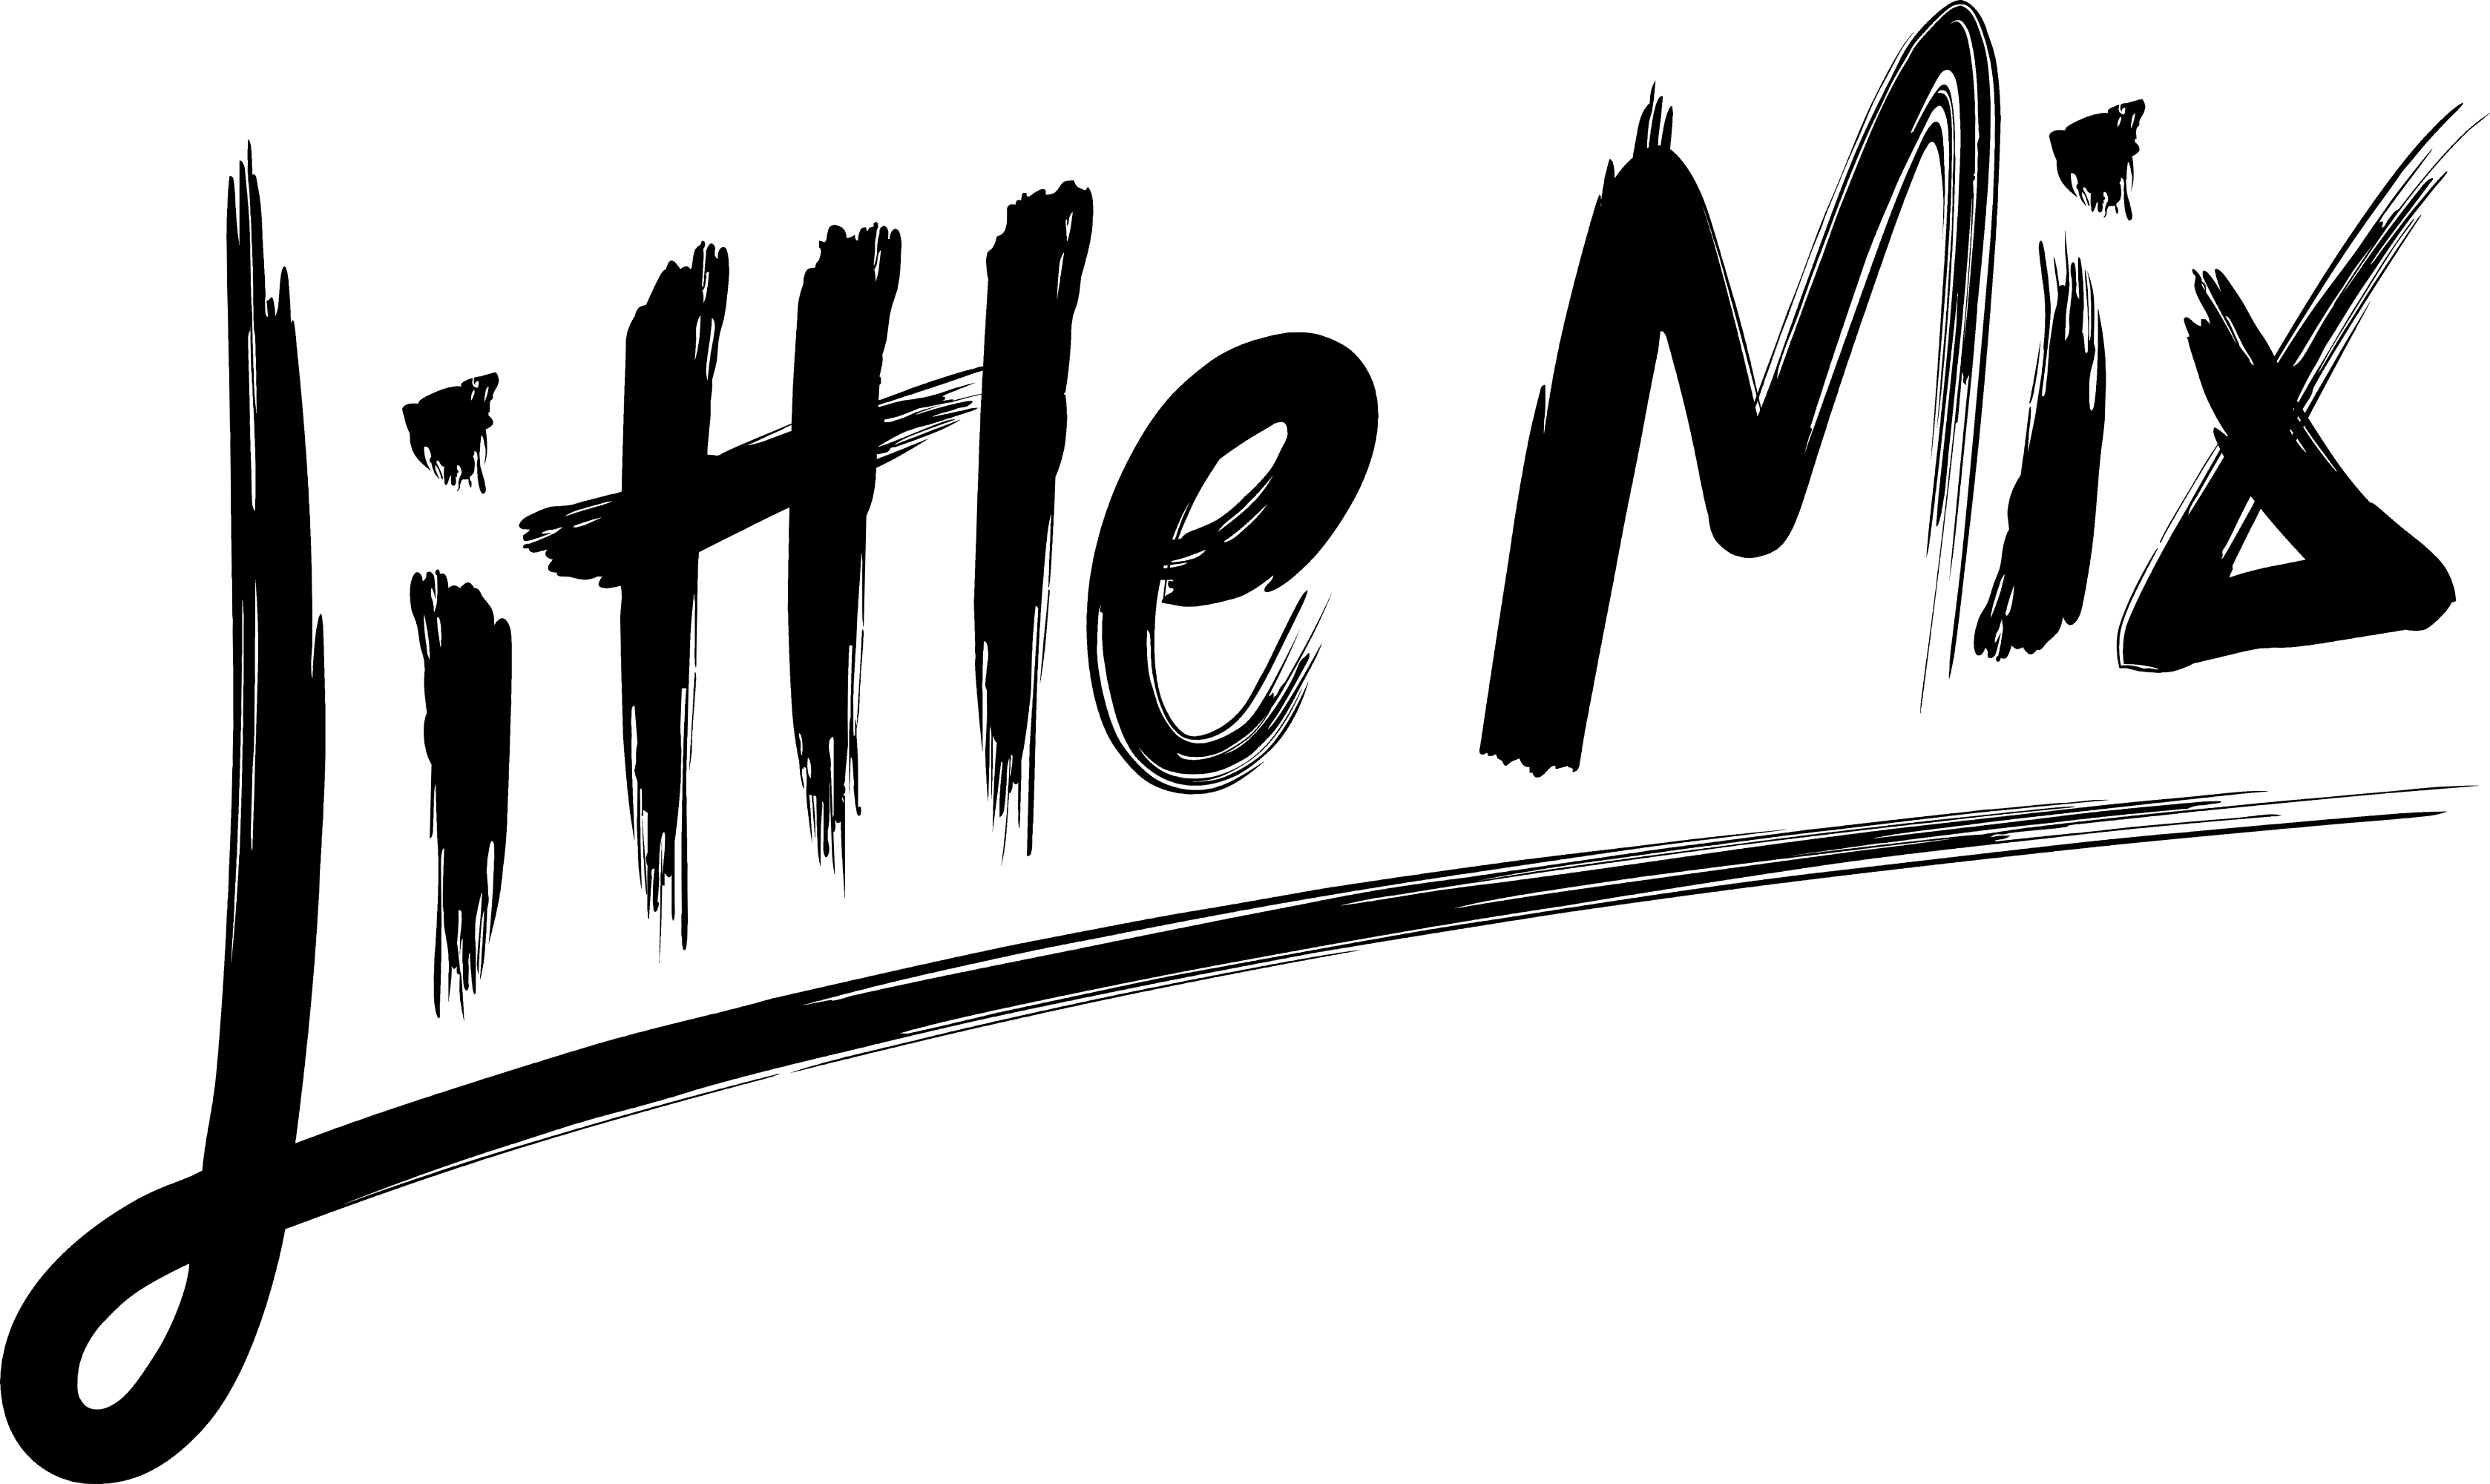 Little Mix logo